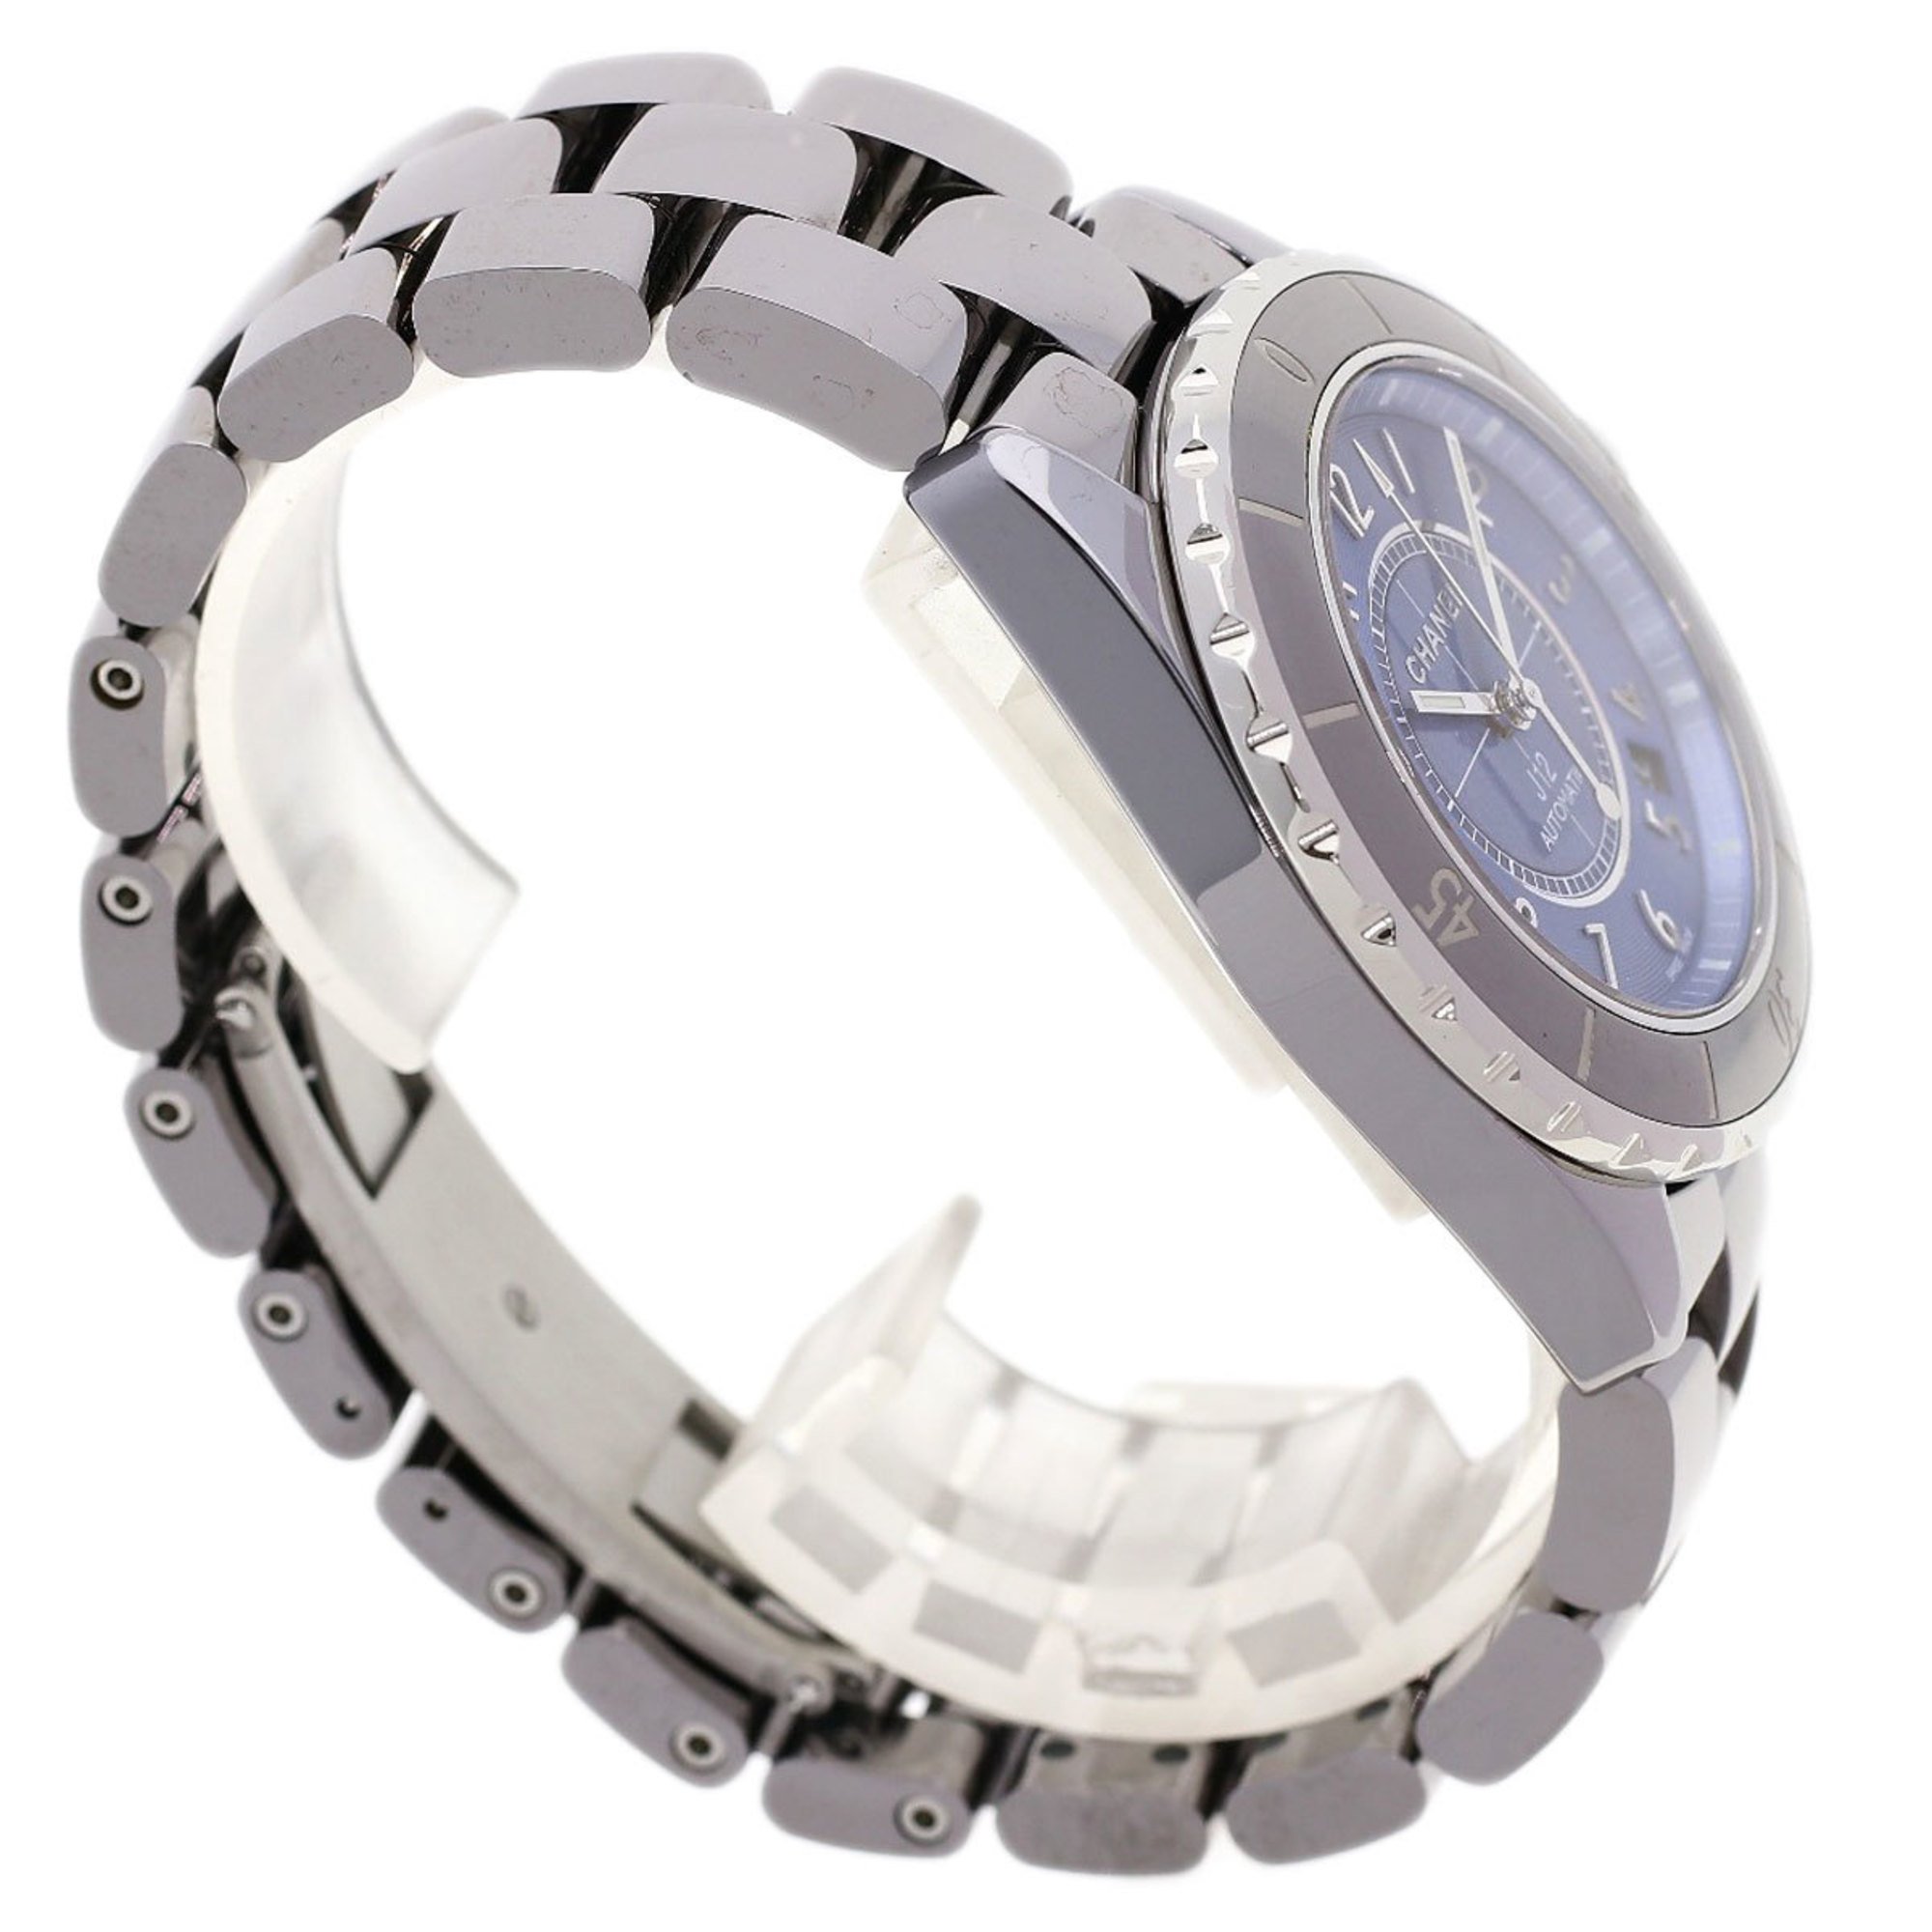 Chanel H4338 J12 Chromatic G.10 Watch Titanium Ceramic Men's CHANEL